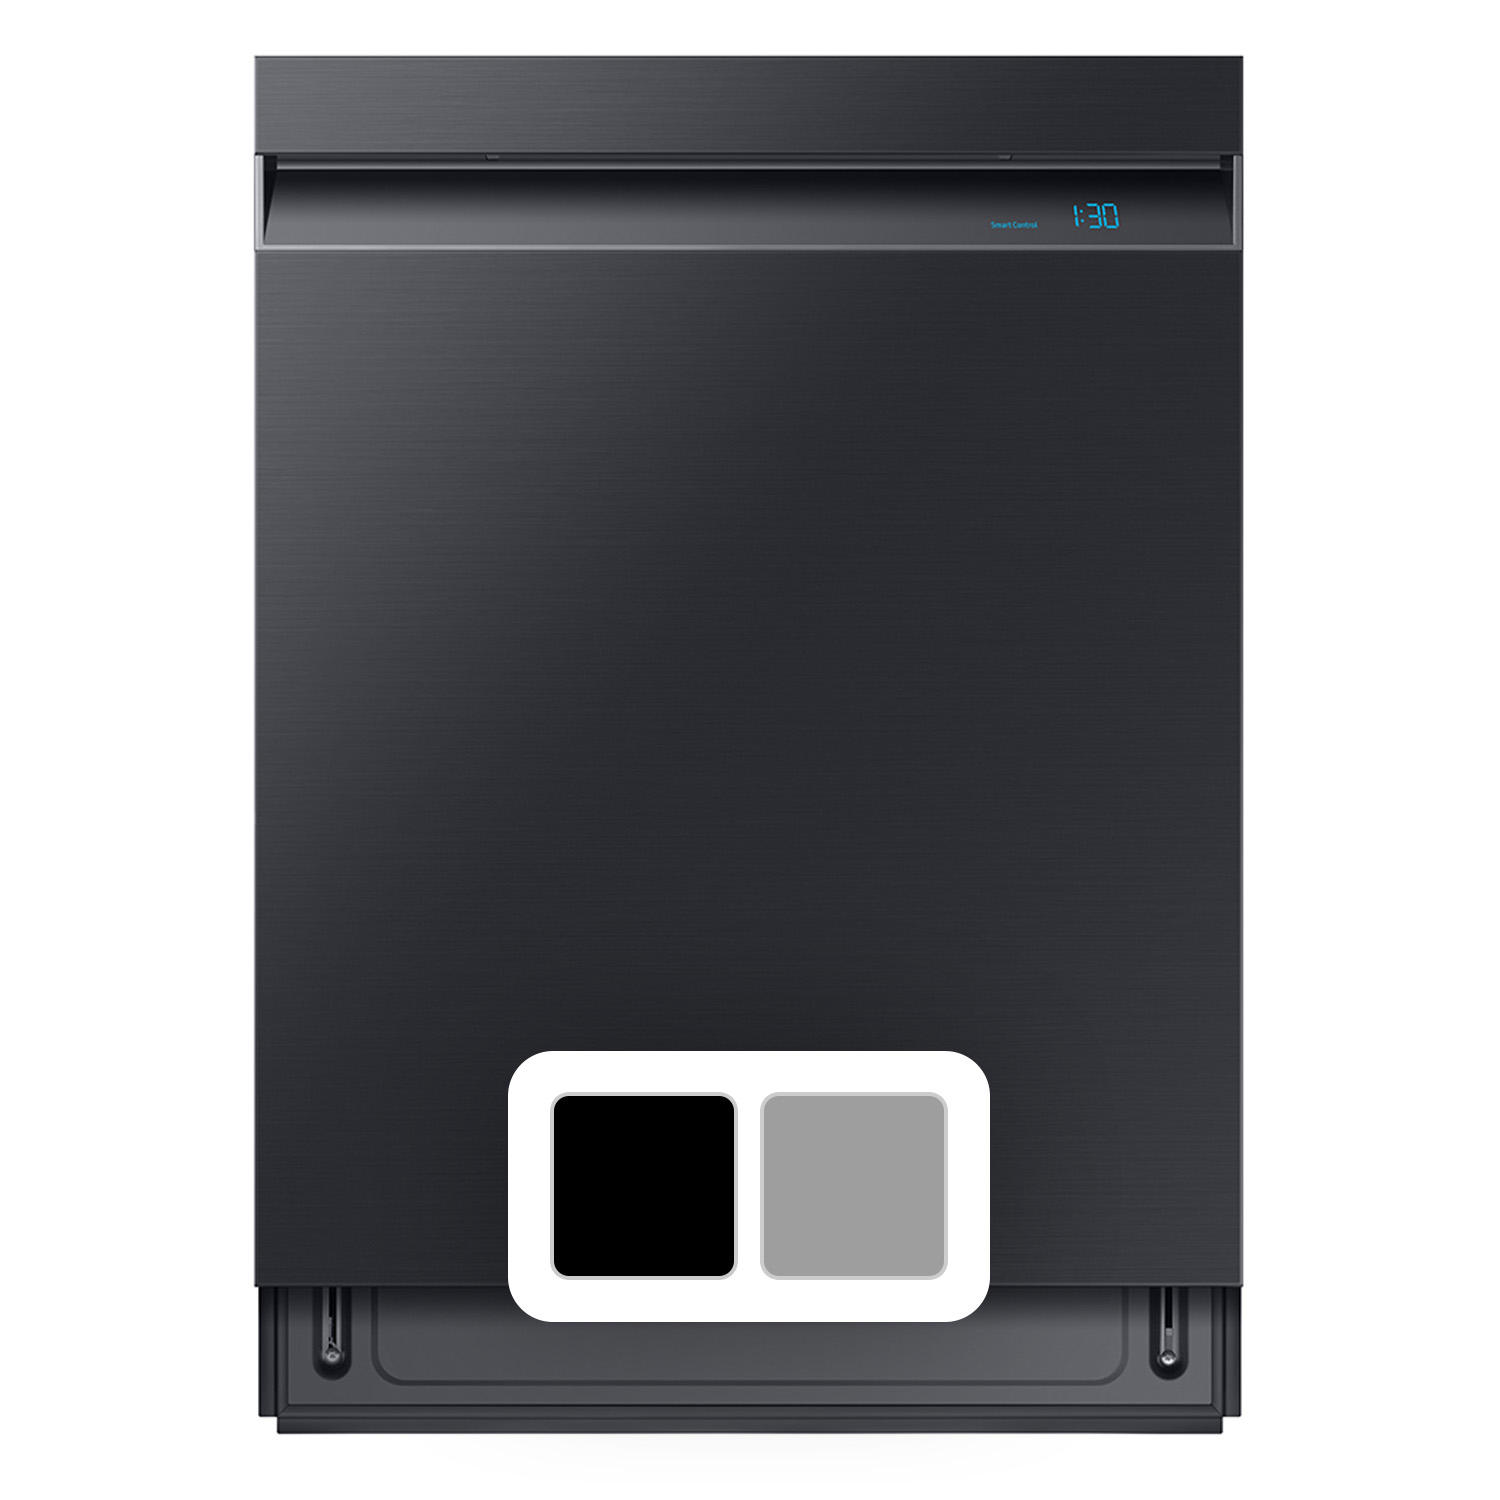 Samsung Top Control Smart Dishwasher w/ AquaBlast (Black Stainless Steel)